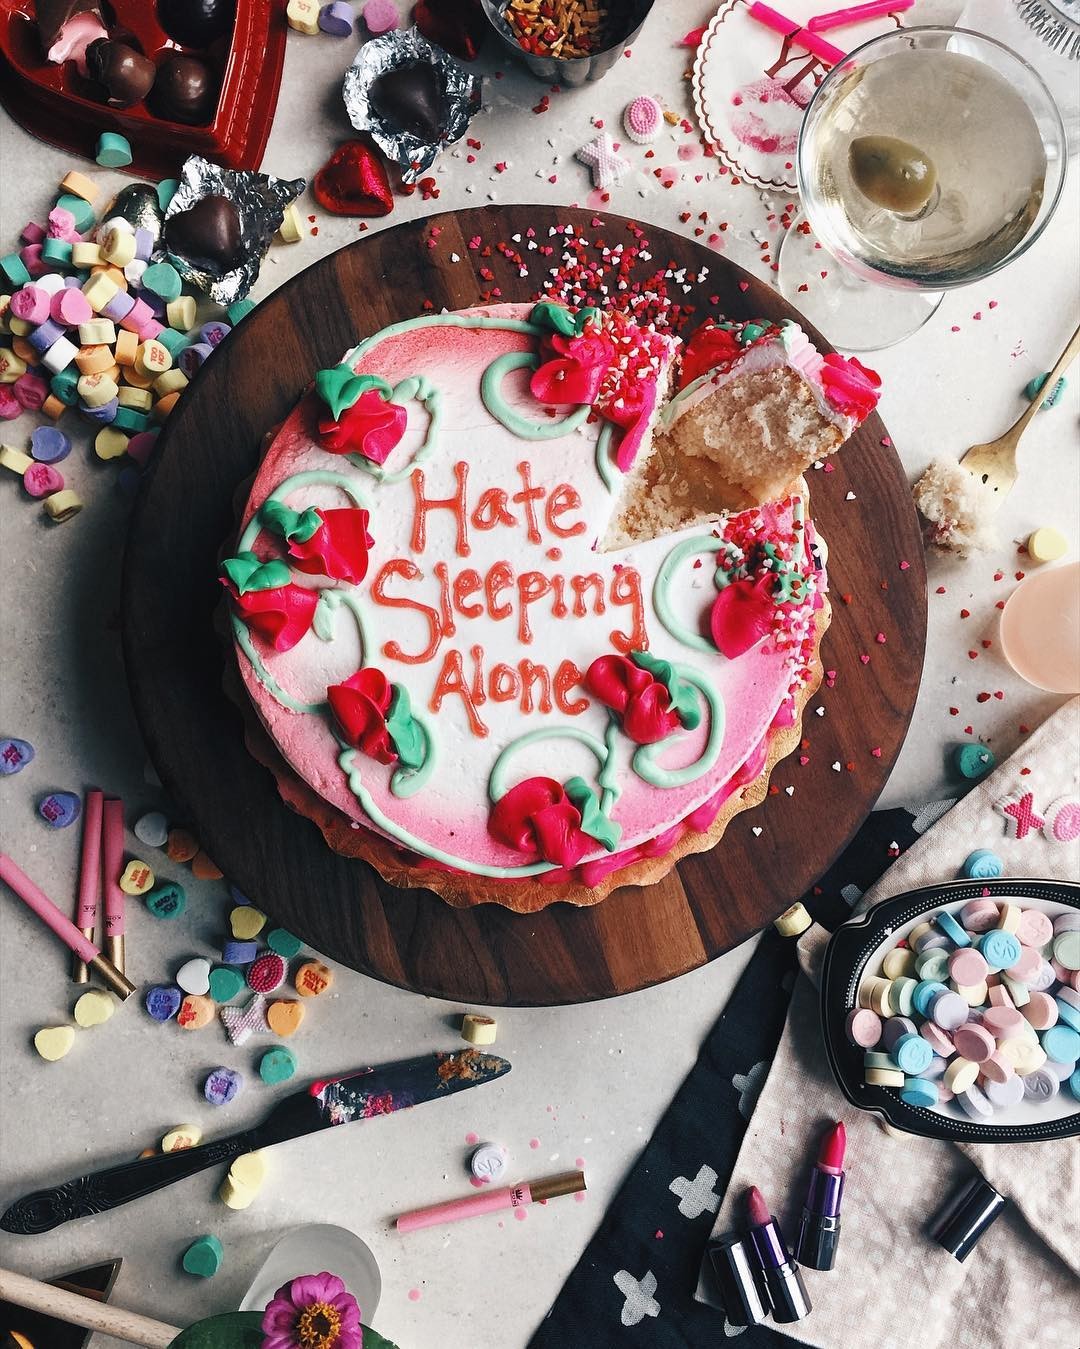 Drake on Cake (Foto: Reprodução/Instagram @drakeoncake)